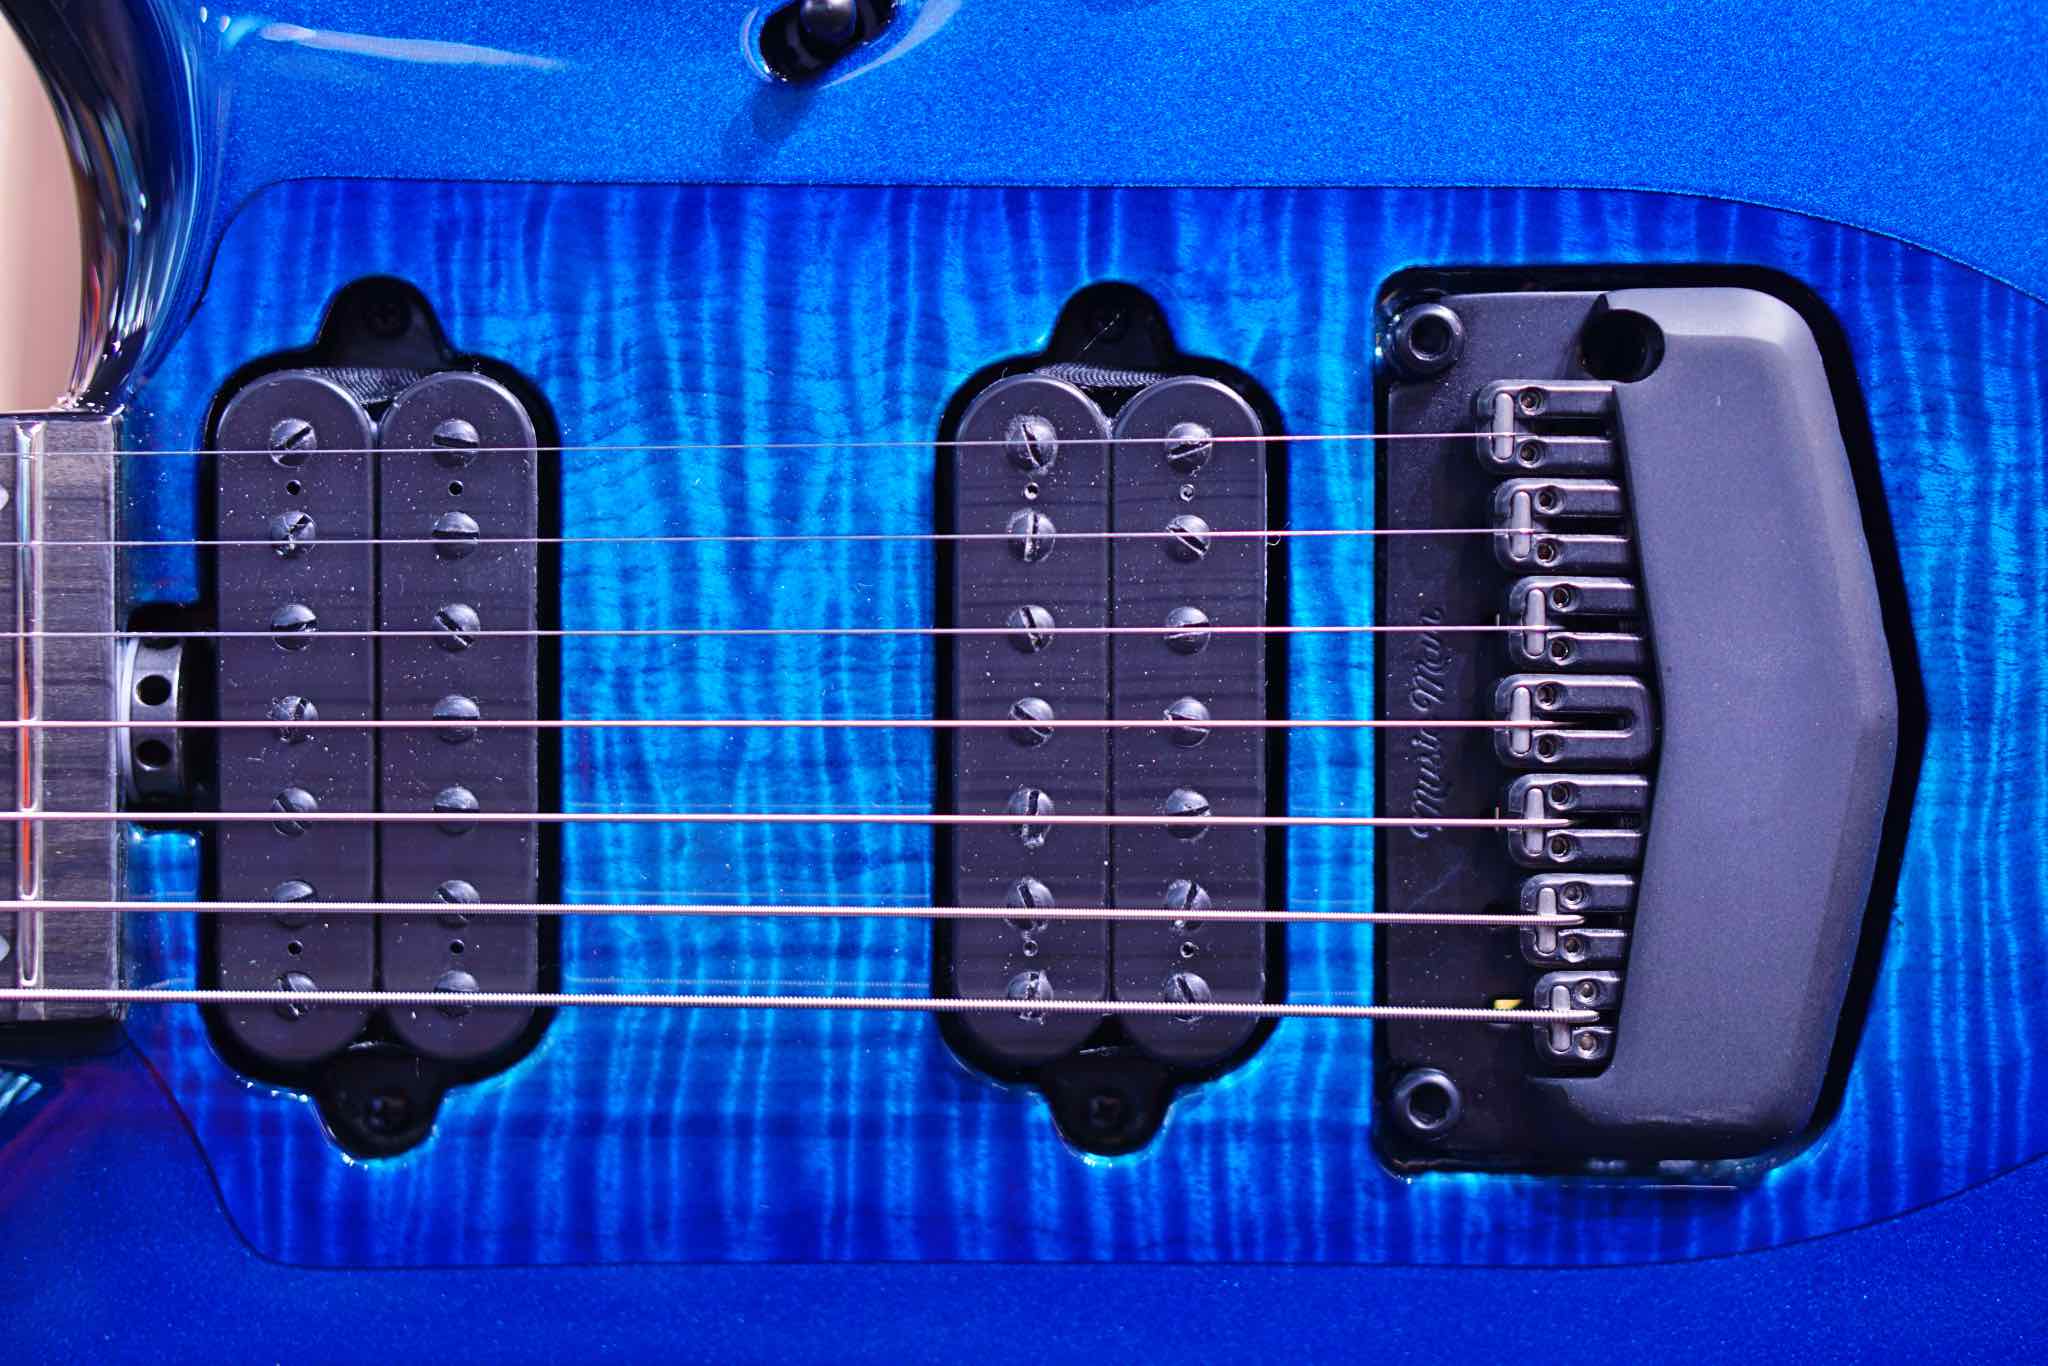 Music Man John Petrucci Majesty 7 Titan Blue M014636 - HIENDGUITAR   Musicman GUITAR